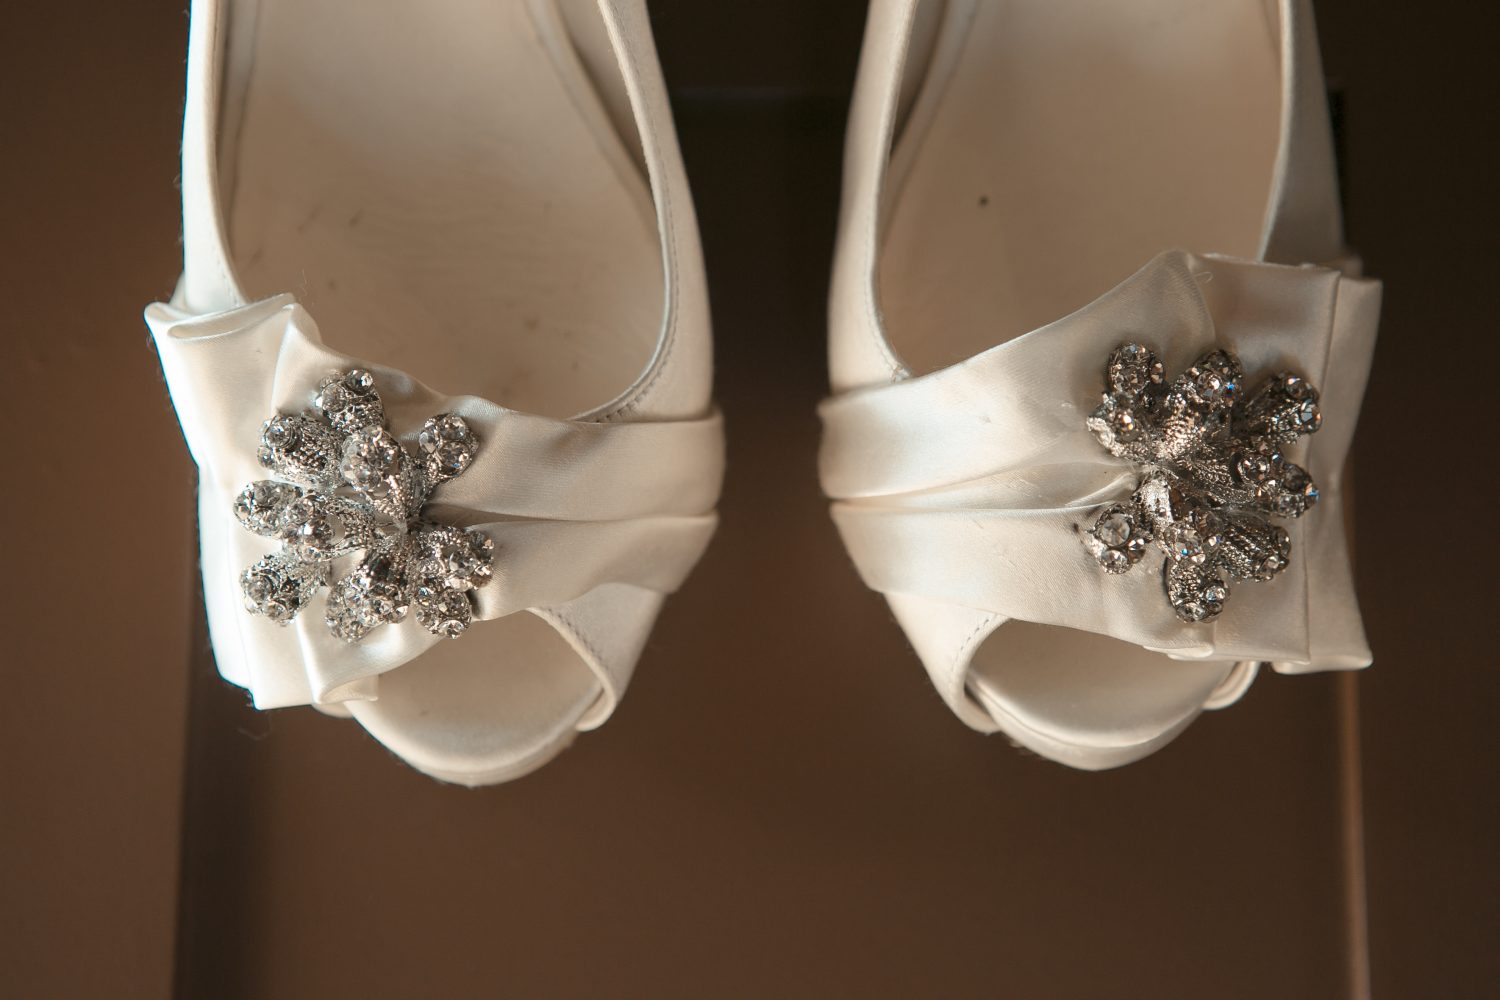 Bridal shoes and wedding color scheme